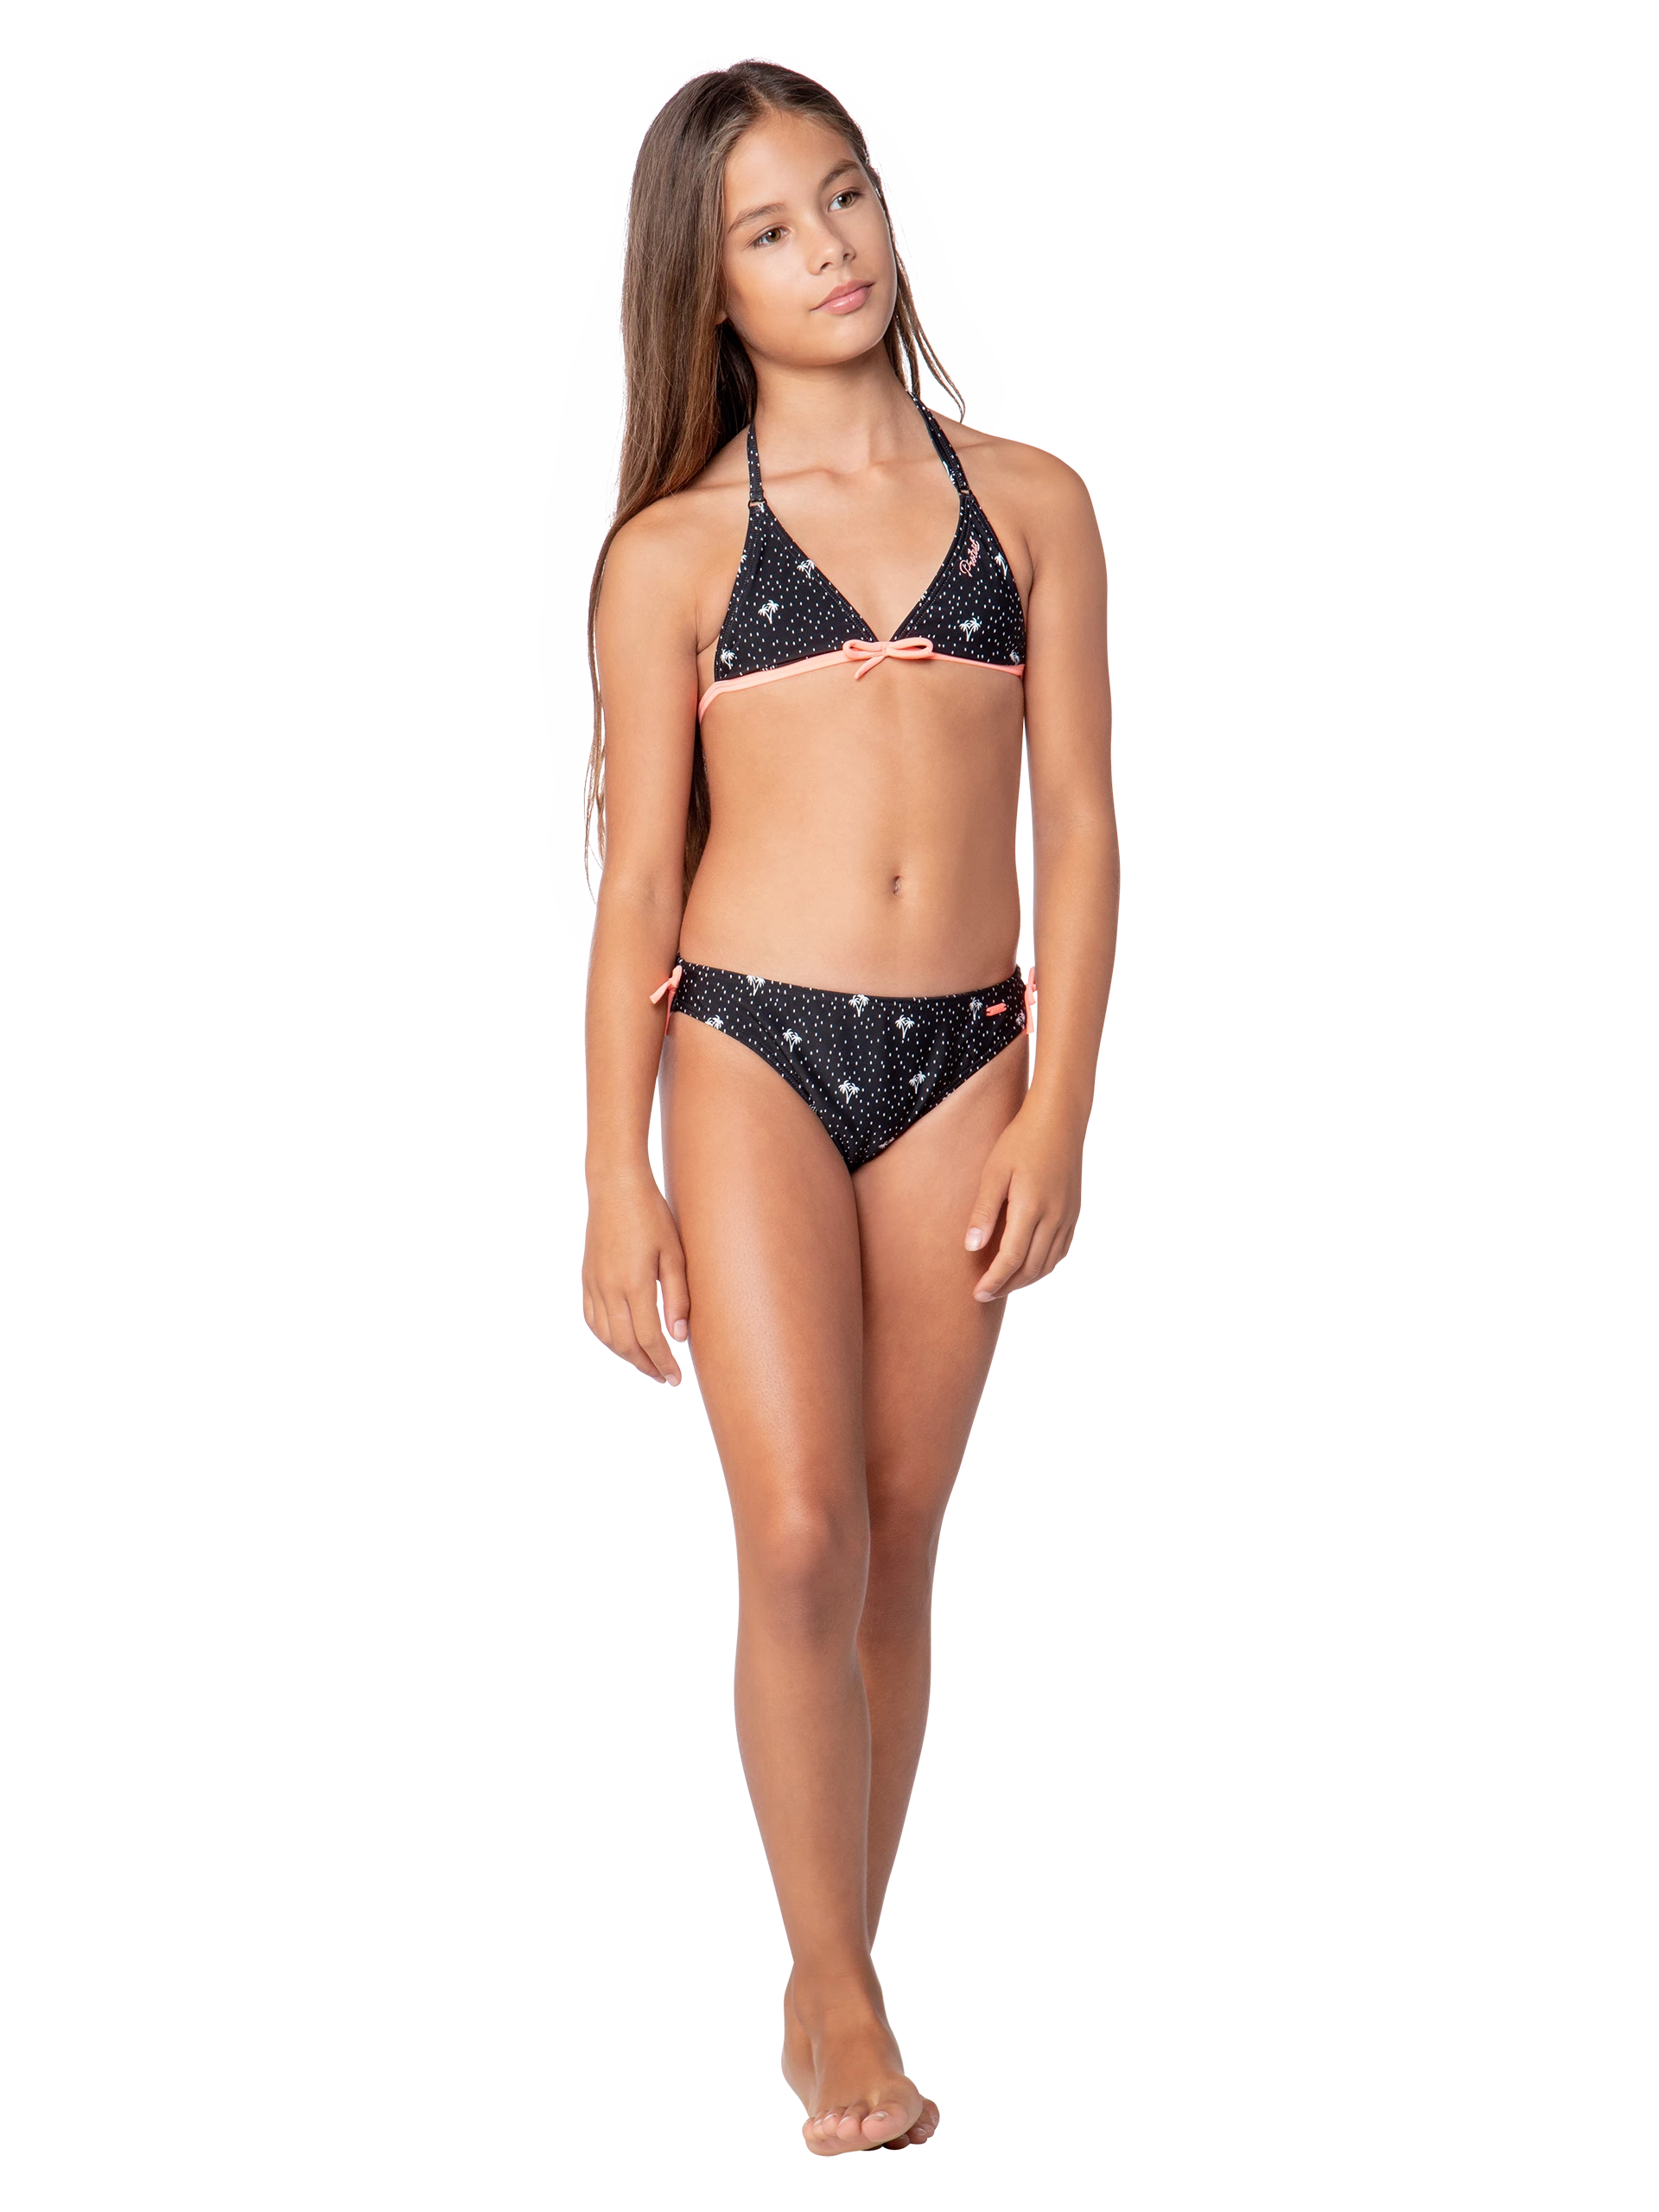 Girl model - Jenifer (10).webp